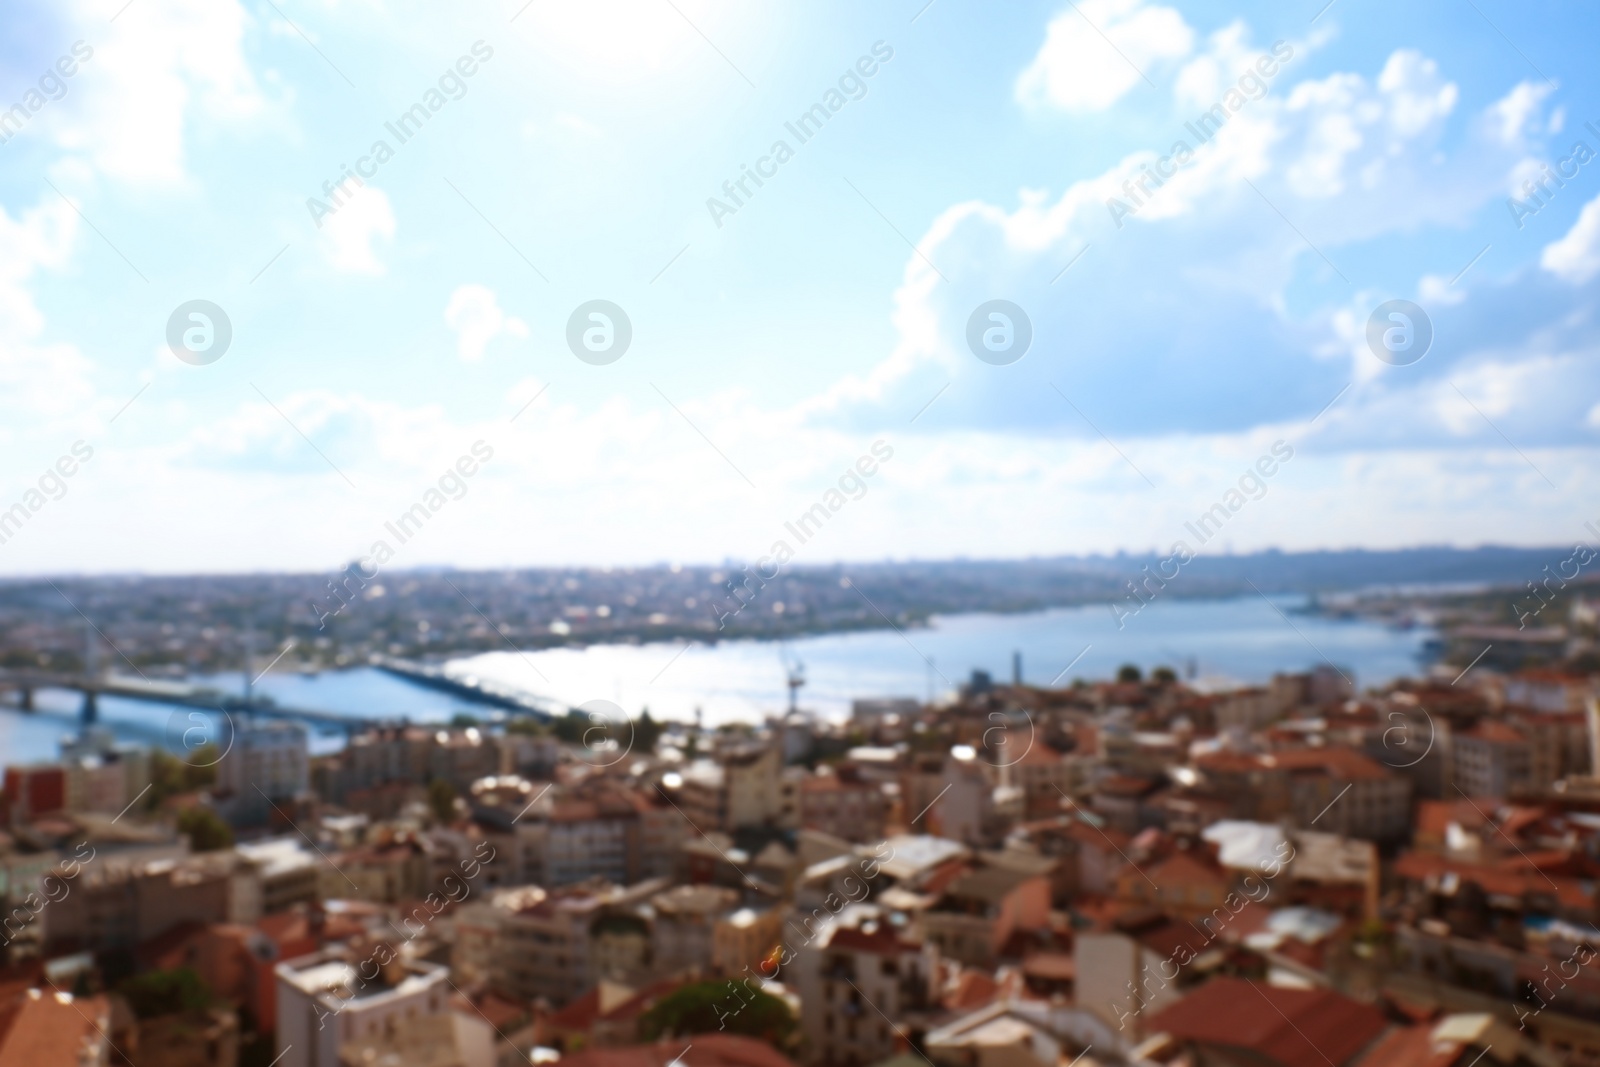 Photo of Blurred view of beautiful city near sea